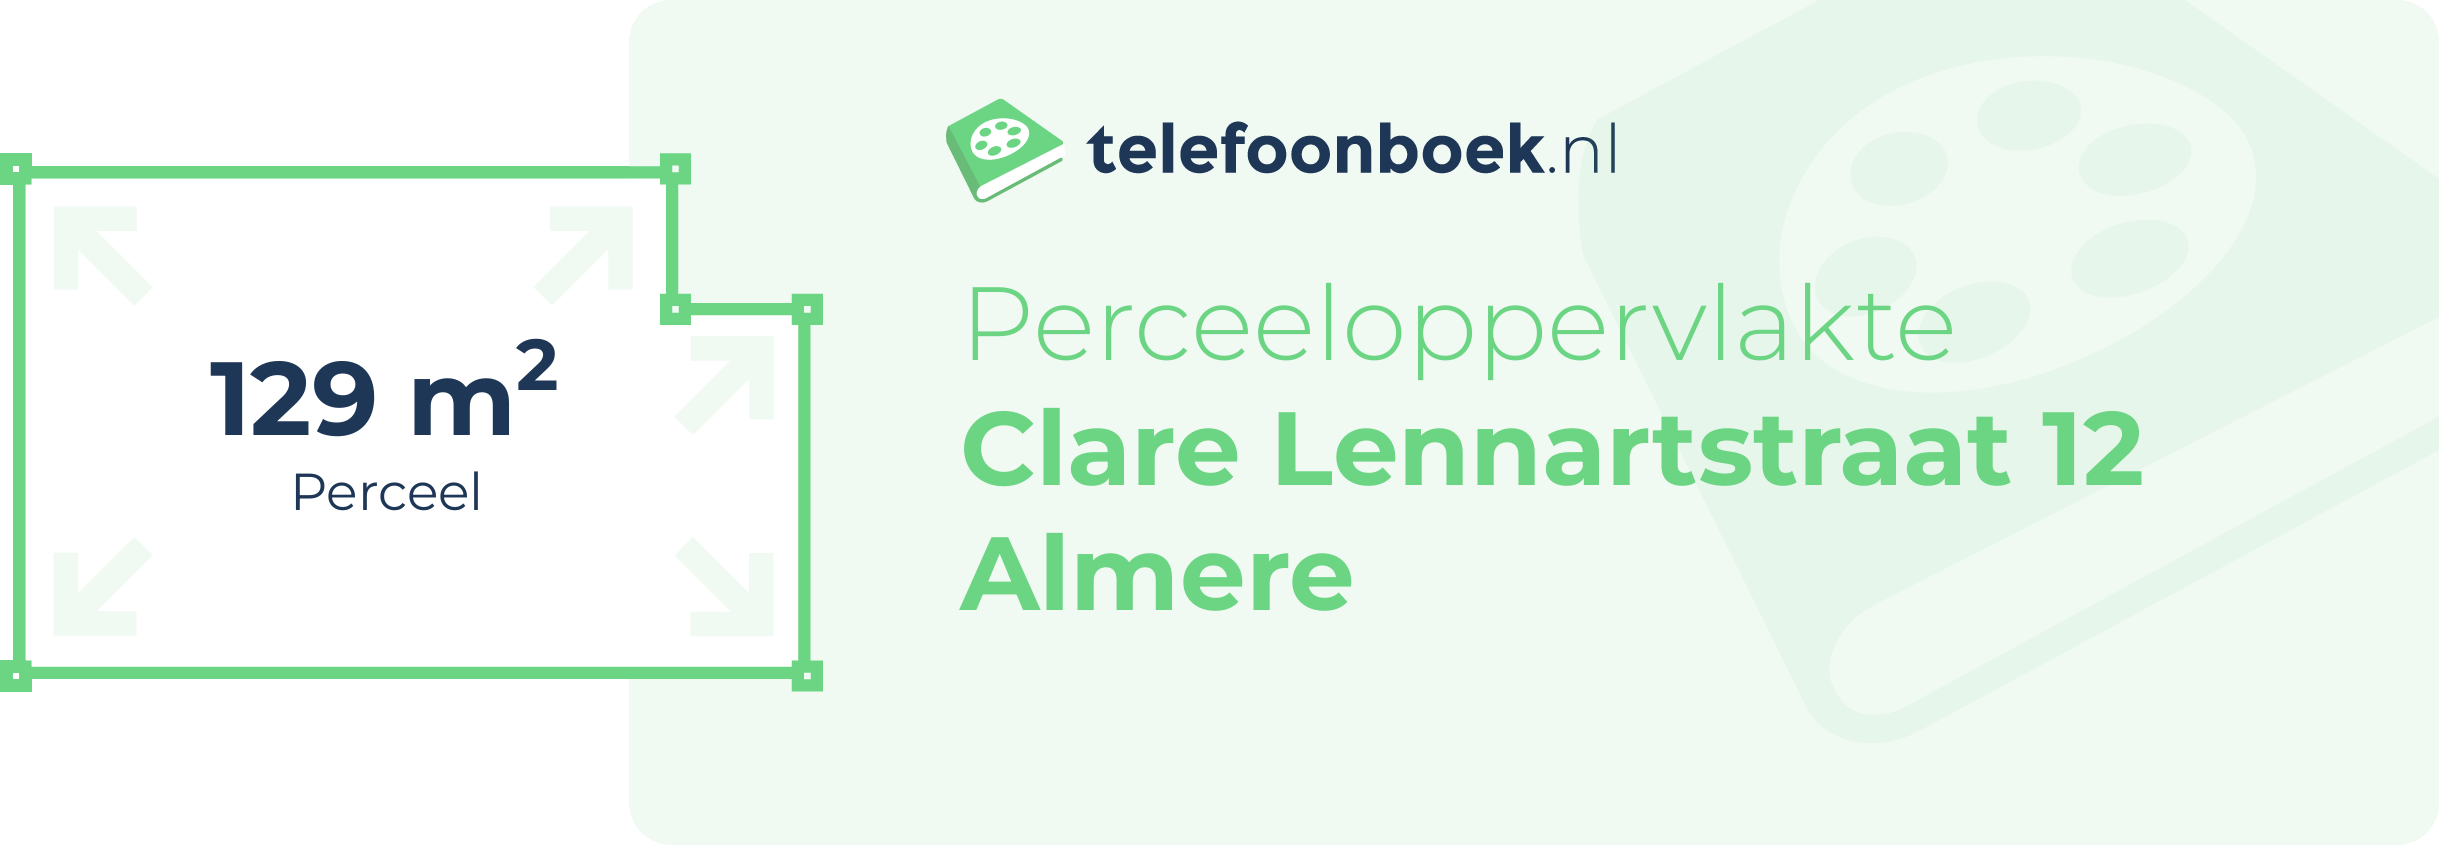 Perceeloppervlakte Clare Lennartstraat 12 Almere